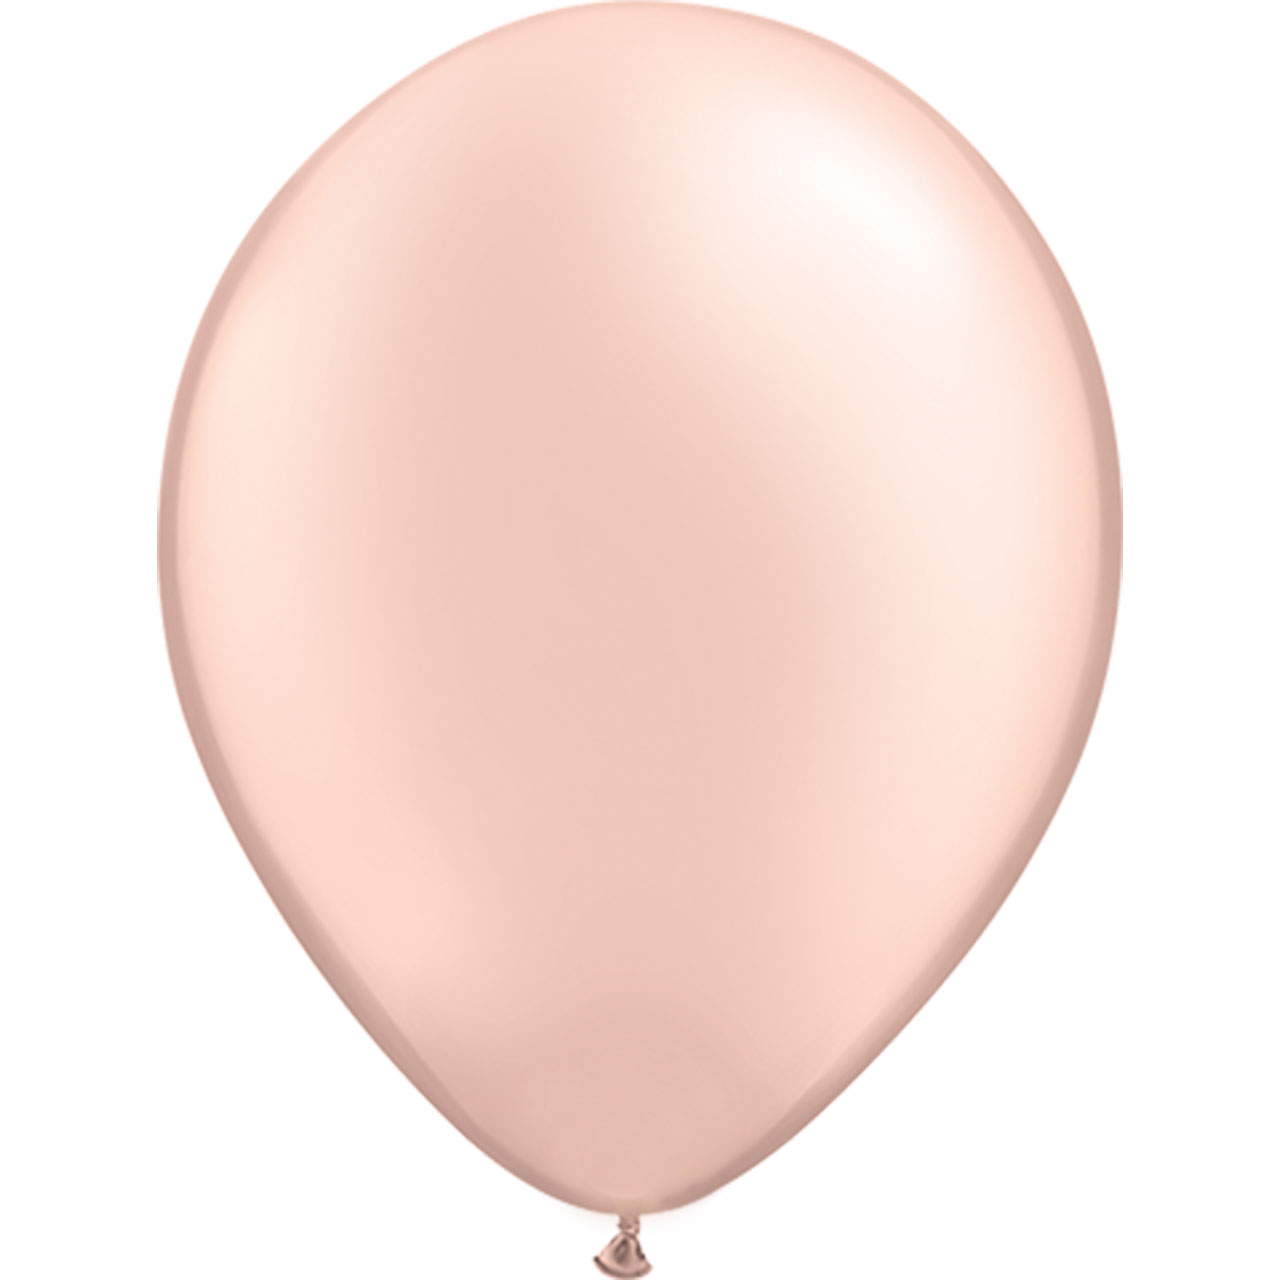 3 Ballons Pearl Peach - Large 40cm